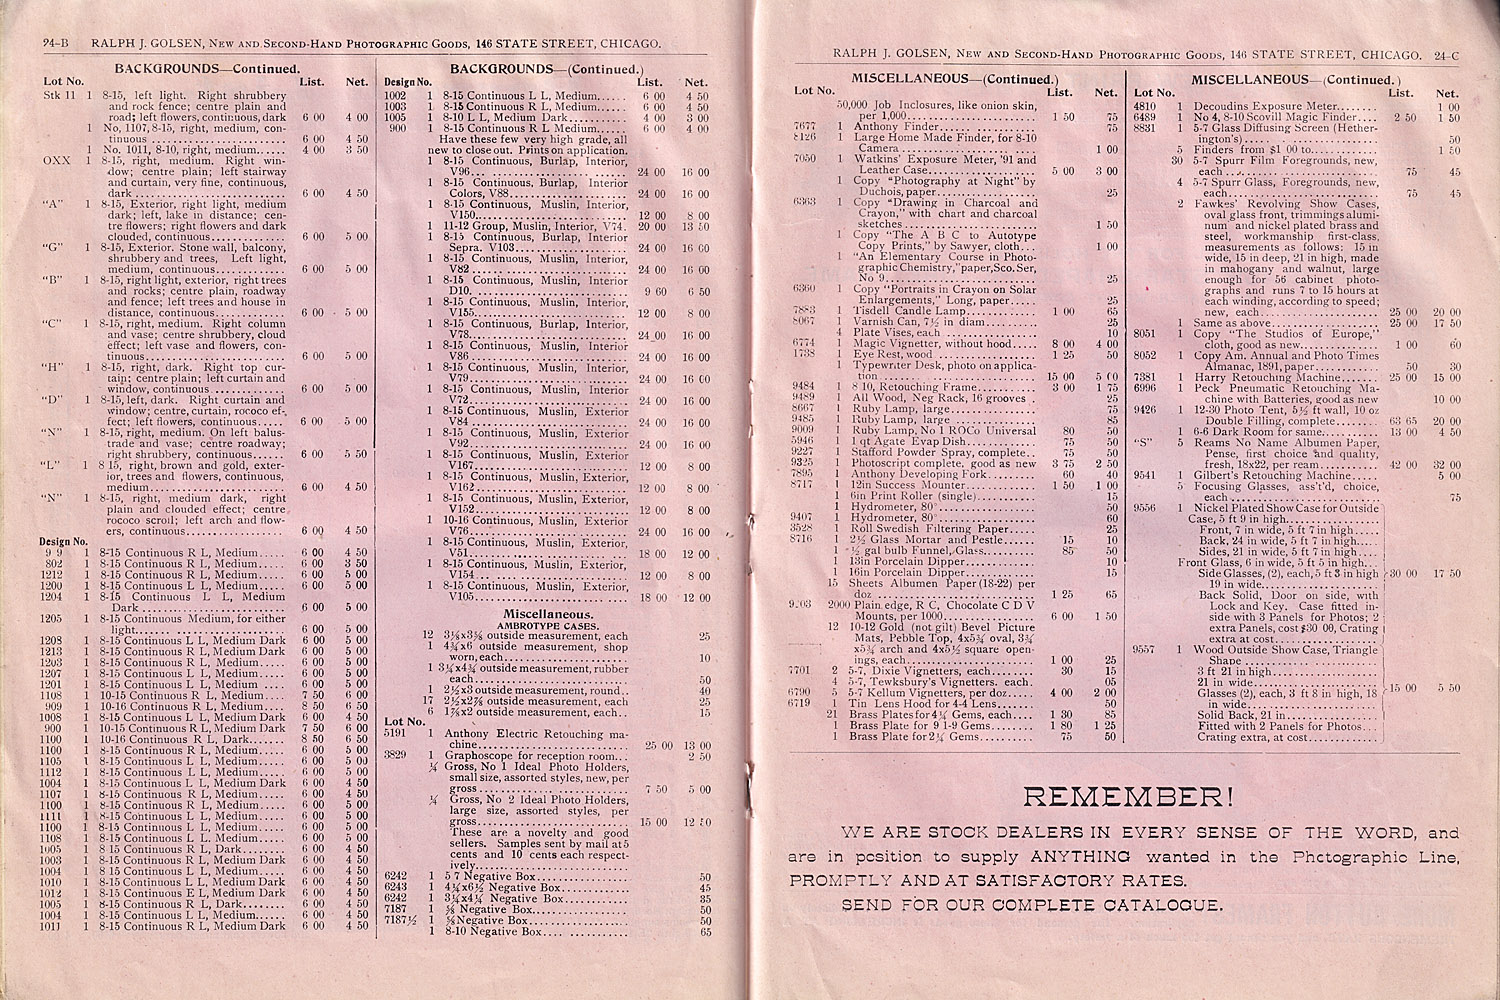 1118.golson.cat.&.bargain.list.no11.1898-24B-24C-1500.jpg